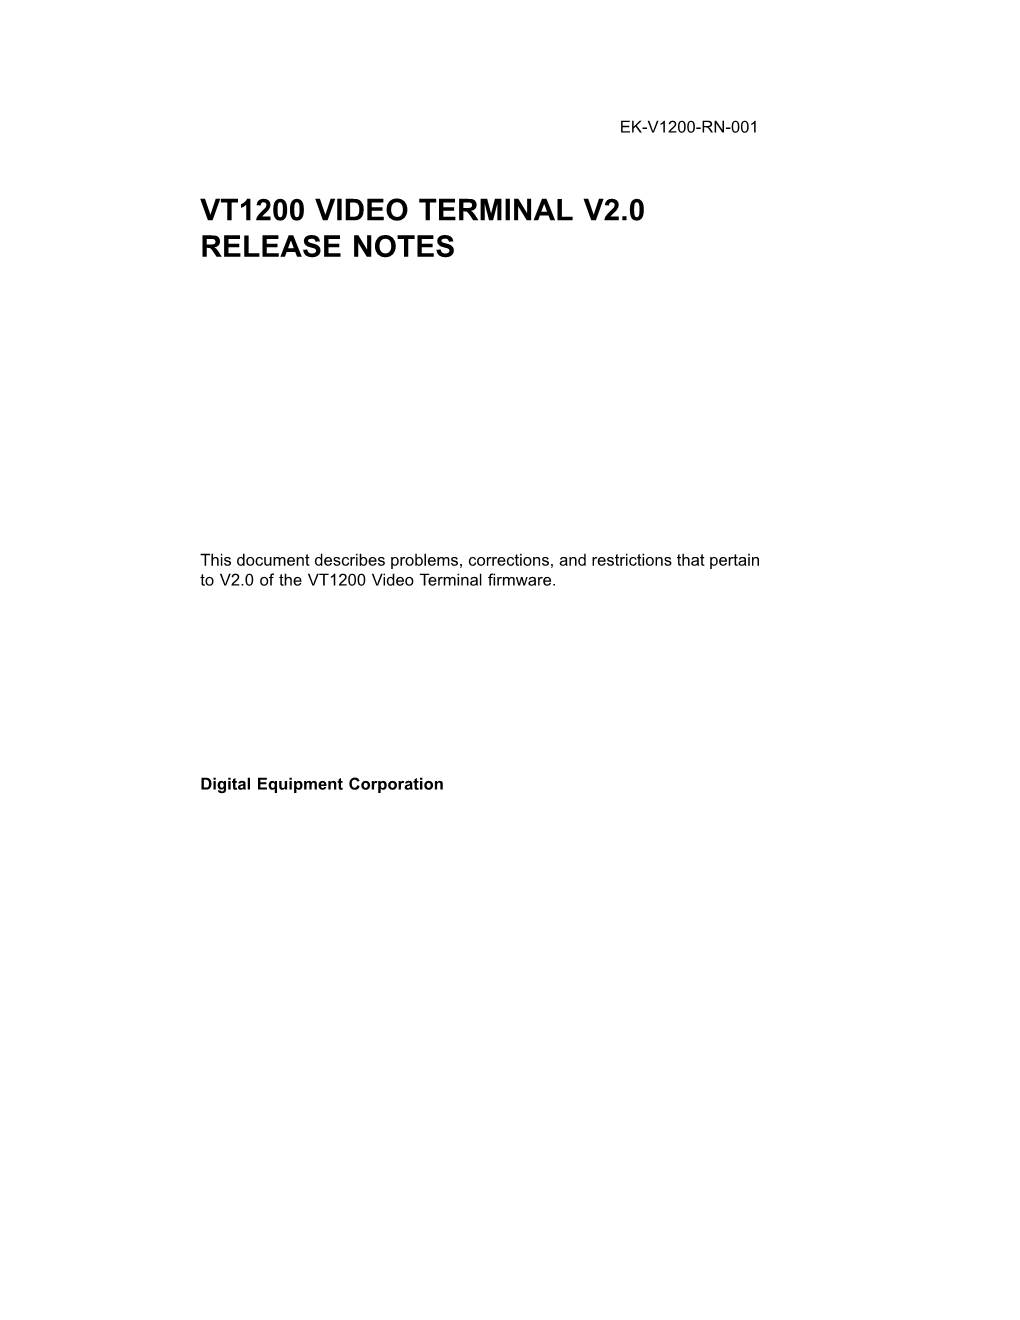 Vt1200 Video Terminal V2.0 Release Notes